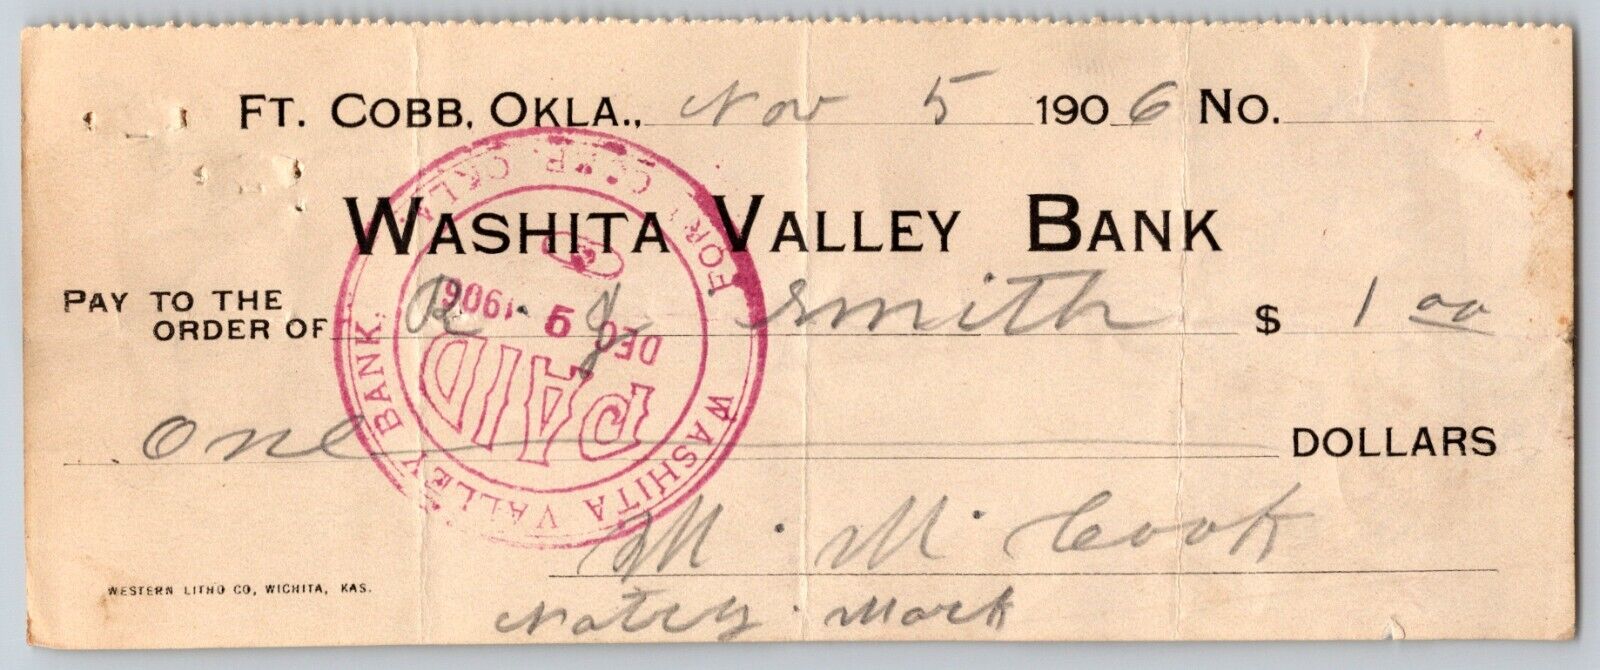 Fort Cobb Territorial Oklahoma 1906 Washita Valley Bank Check Scarce